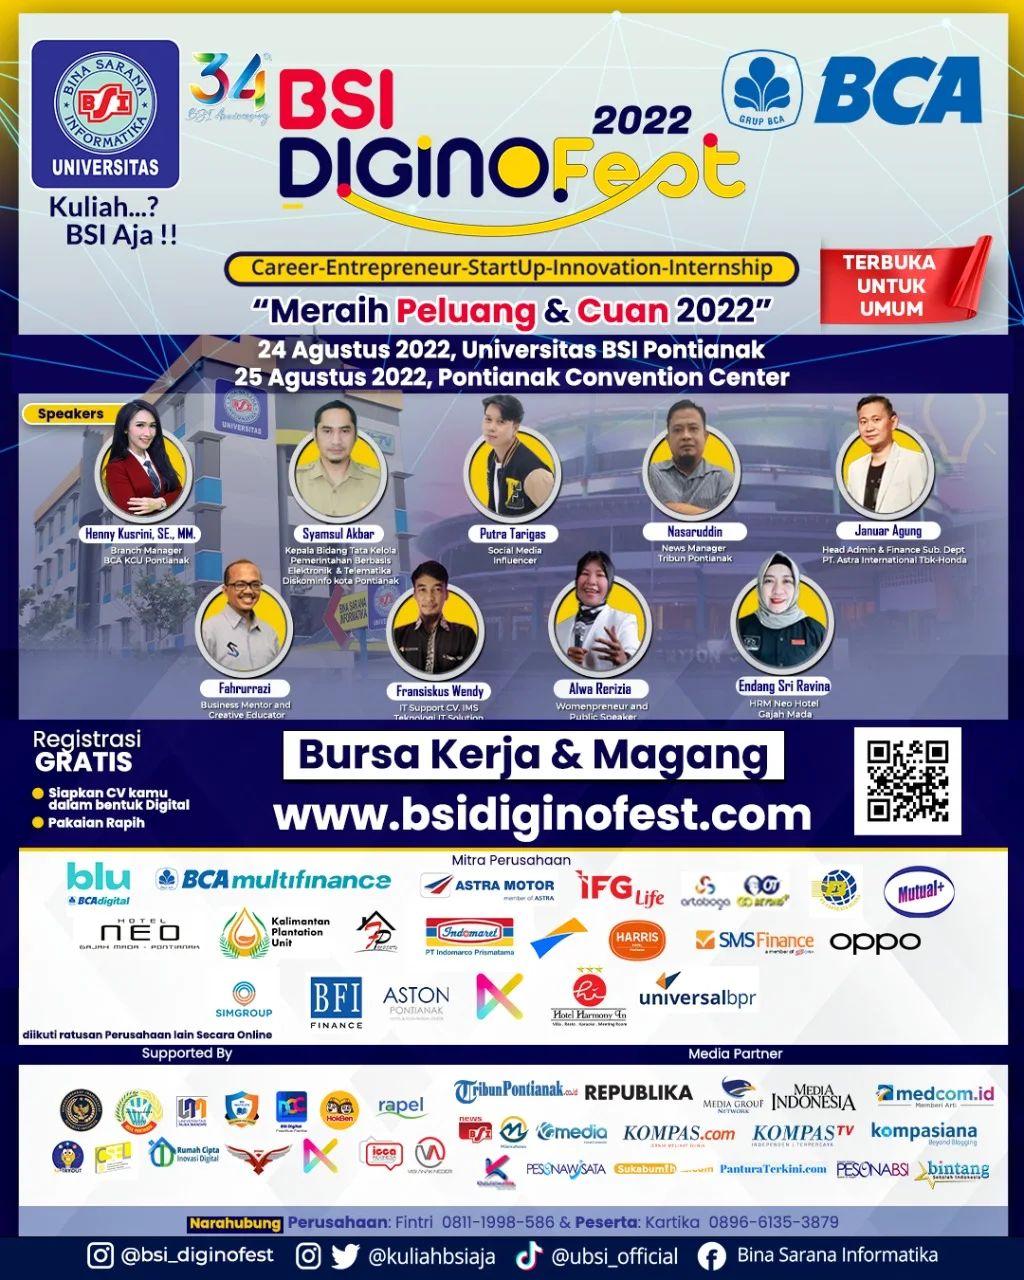 BSI Diginofest 2022 - Bursa Kerja & Magang Pontianak